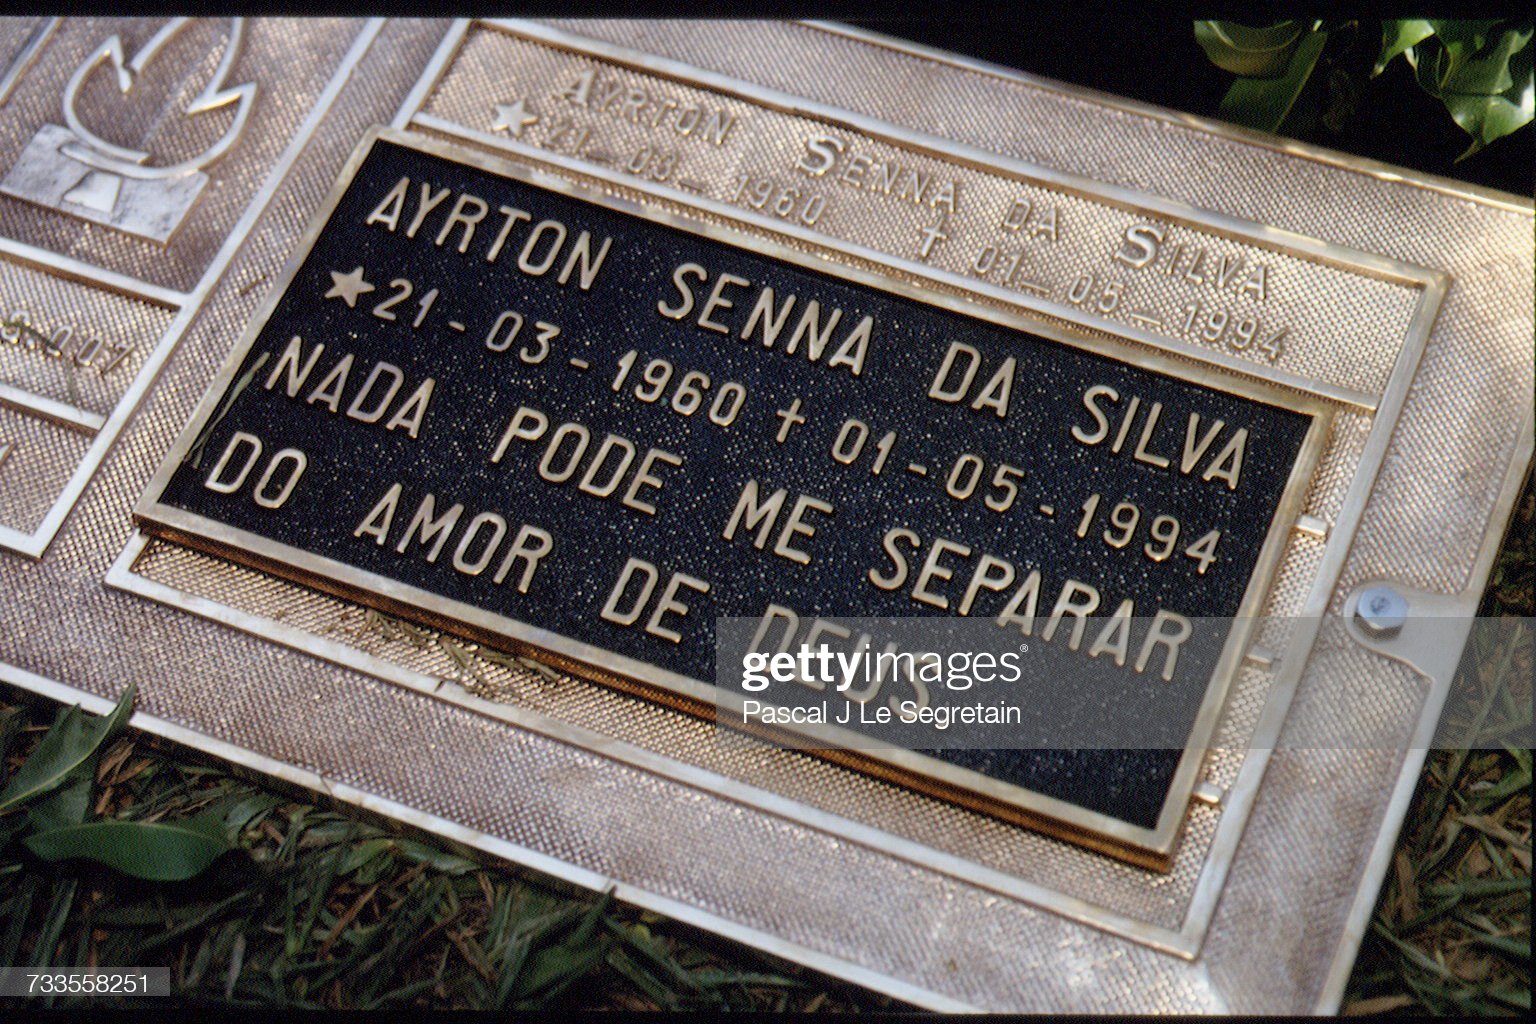 Ayrton Senna's grave. 